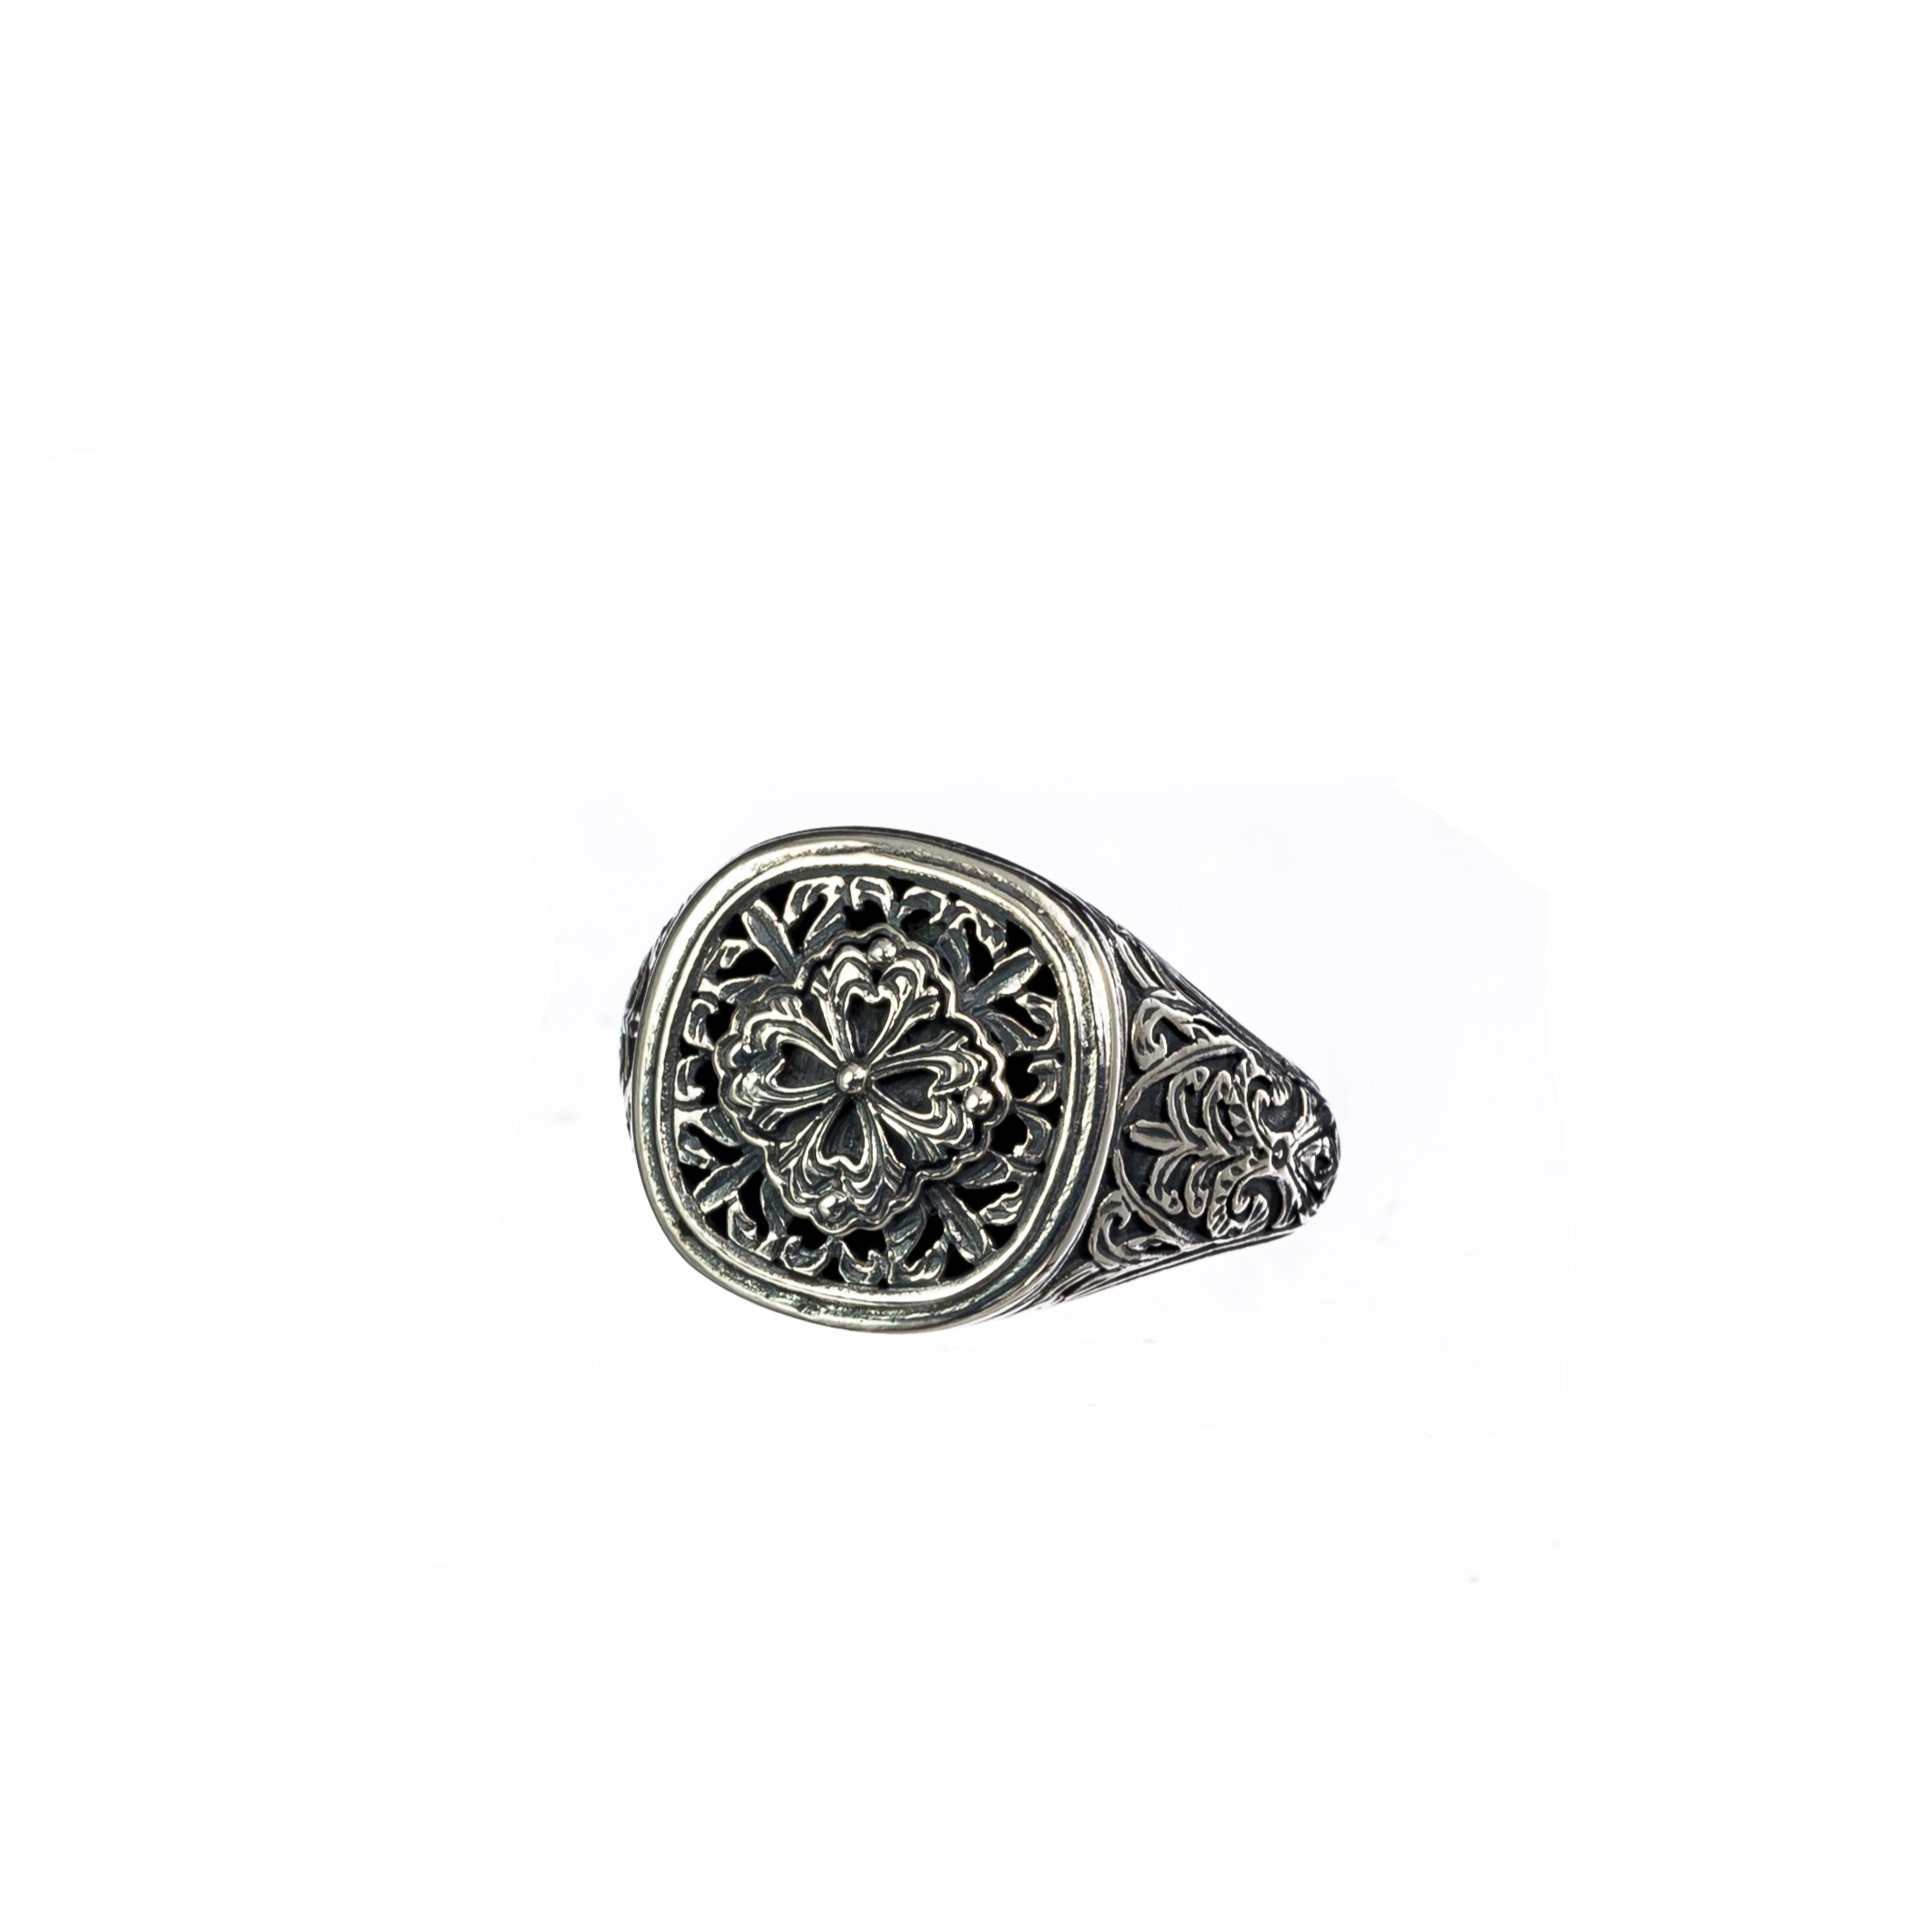 Byzantine ring in Sterling silver